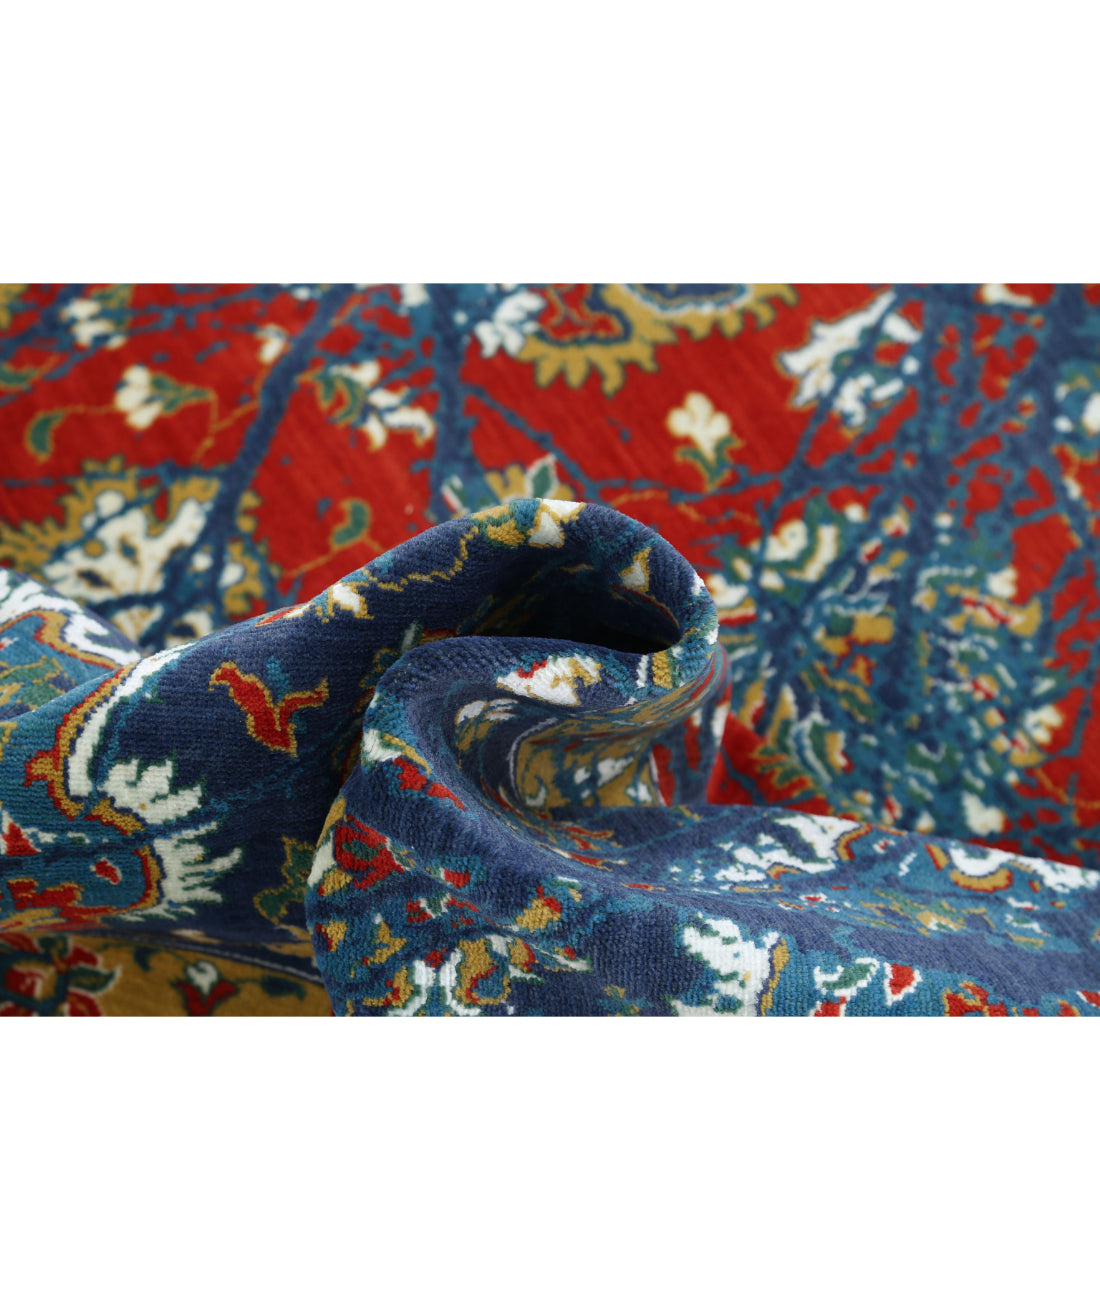 Gulshan Wool & Bamboo Silk Rug - 8'10'' x 12'3'' 8'10'' x 12'3'' (265 X 368) / Blue / Red